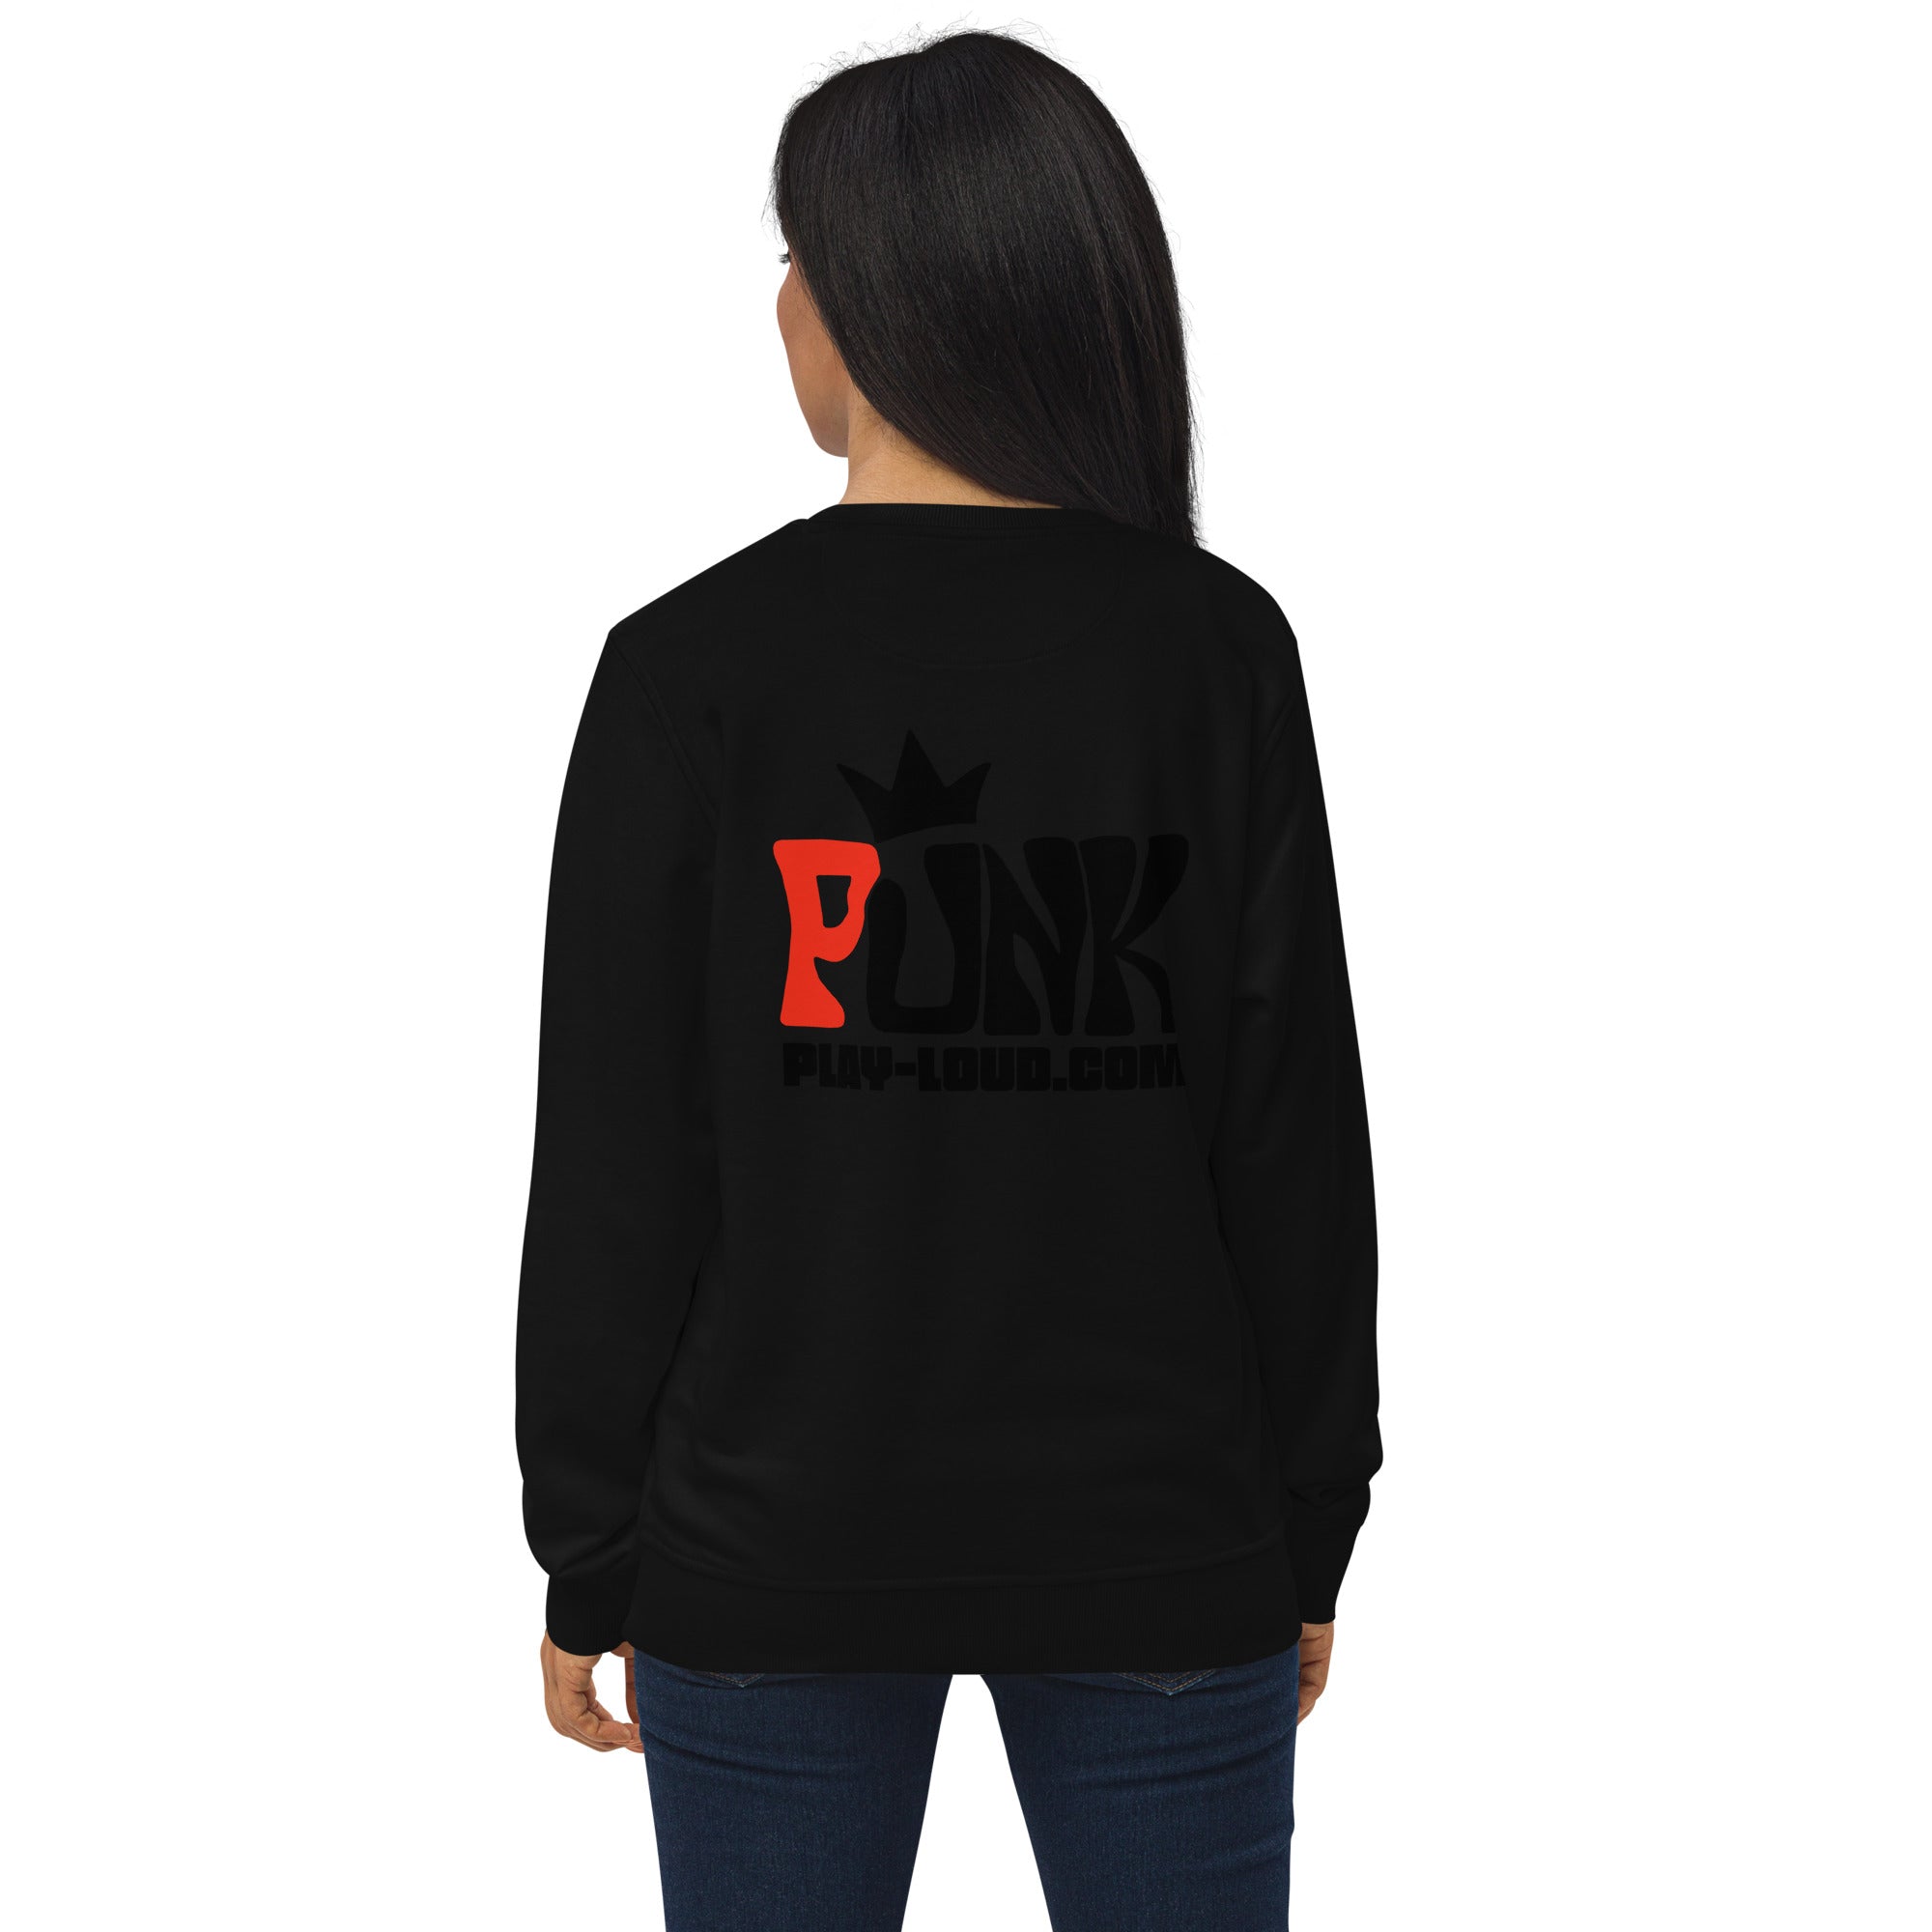 Punk unisex organic sweatshirt for teens & adults